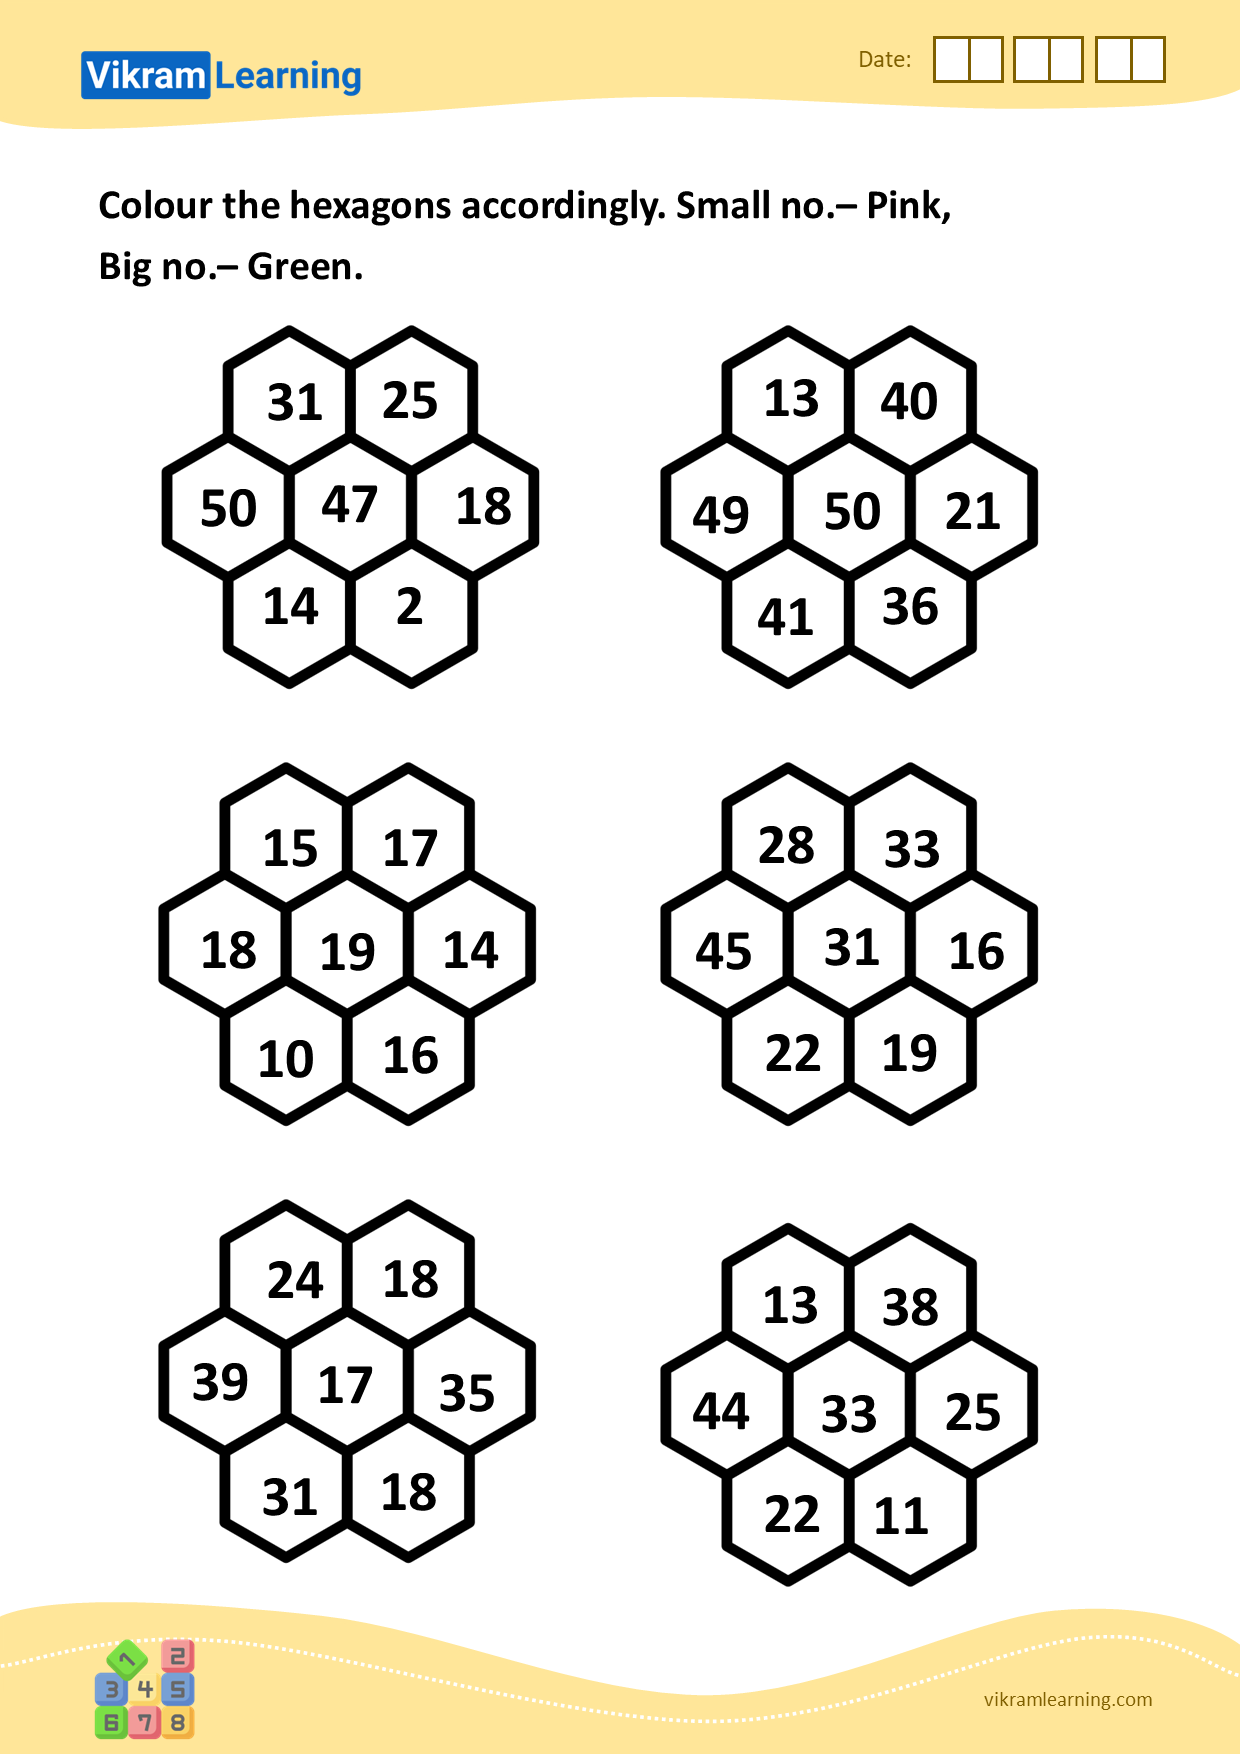 Download colour the hexagons accordingly. small no.– pink, big no.– green worksheets